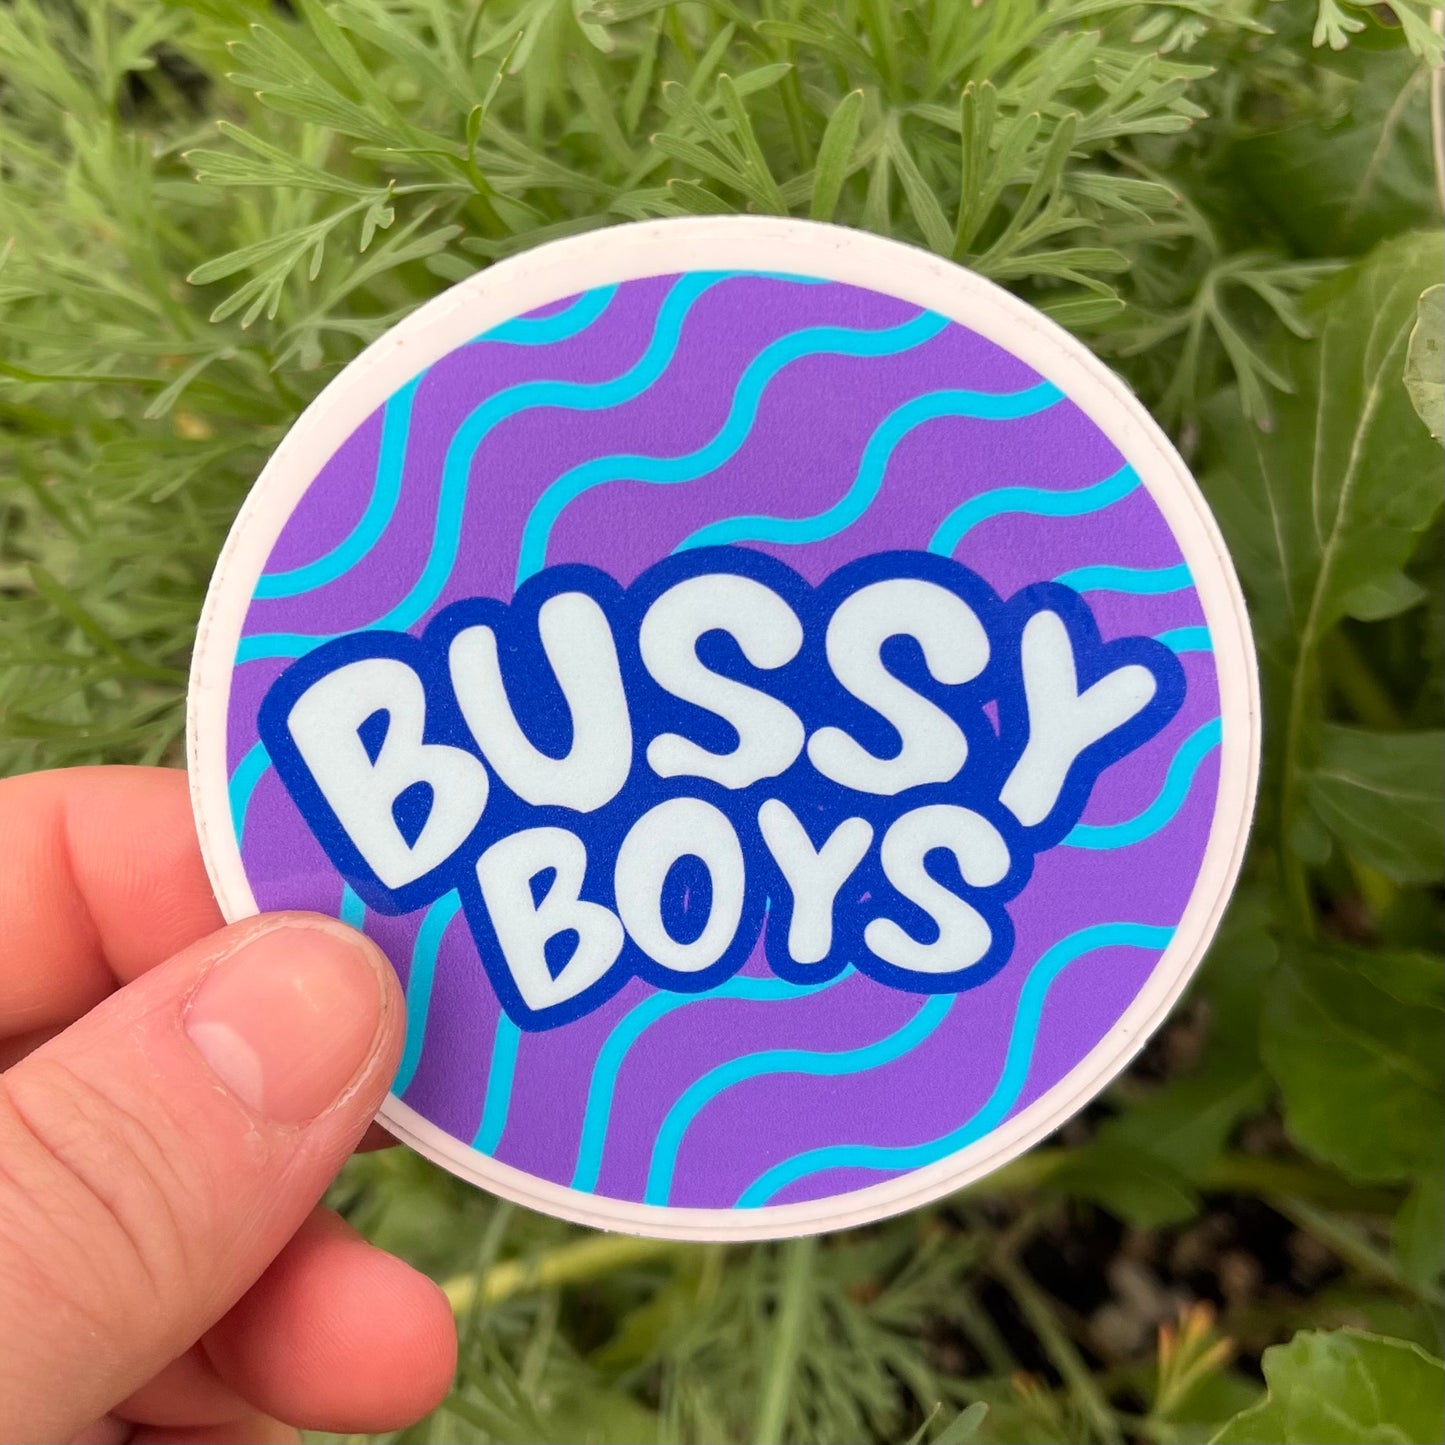 Bussy Boys Sticker